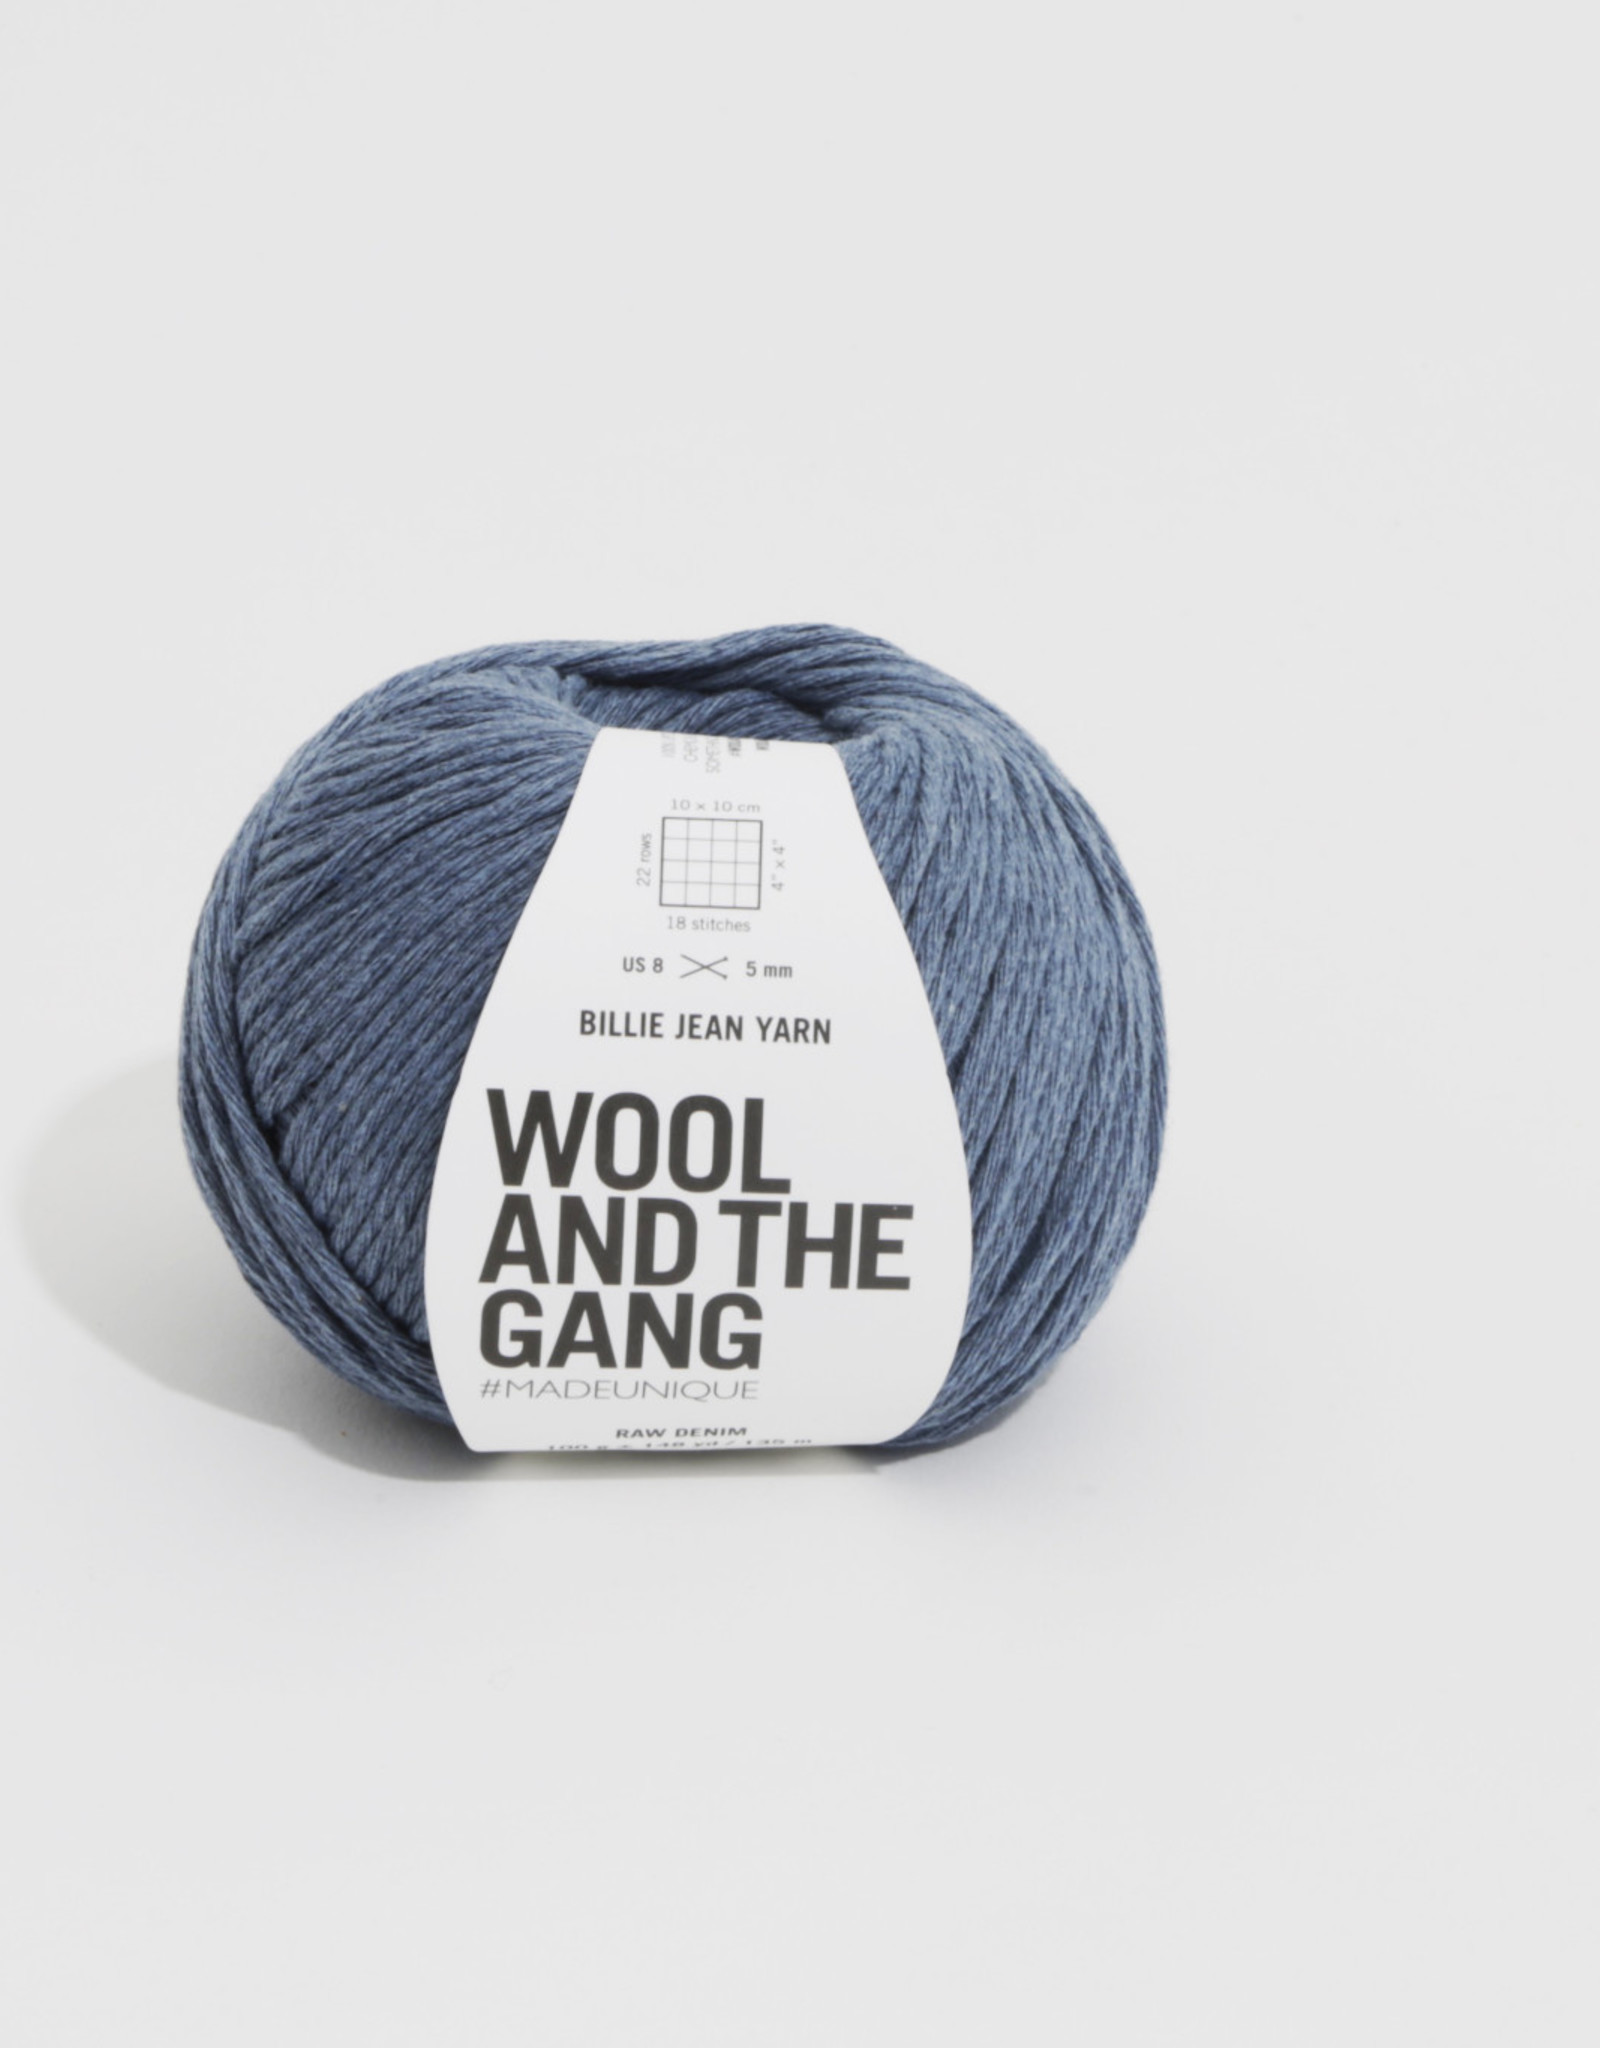 Wool and the Gang Billie Jean Yarn